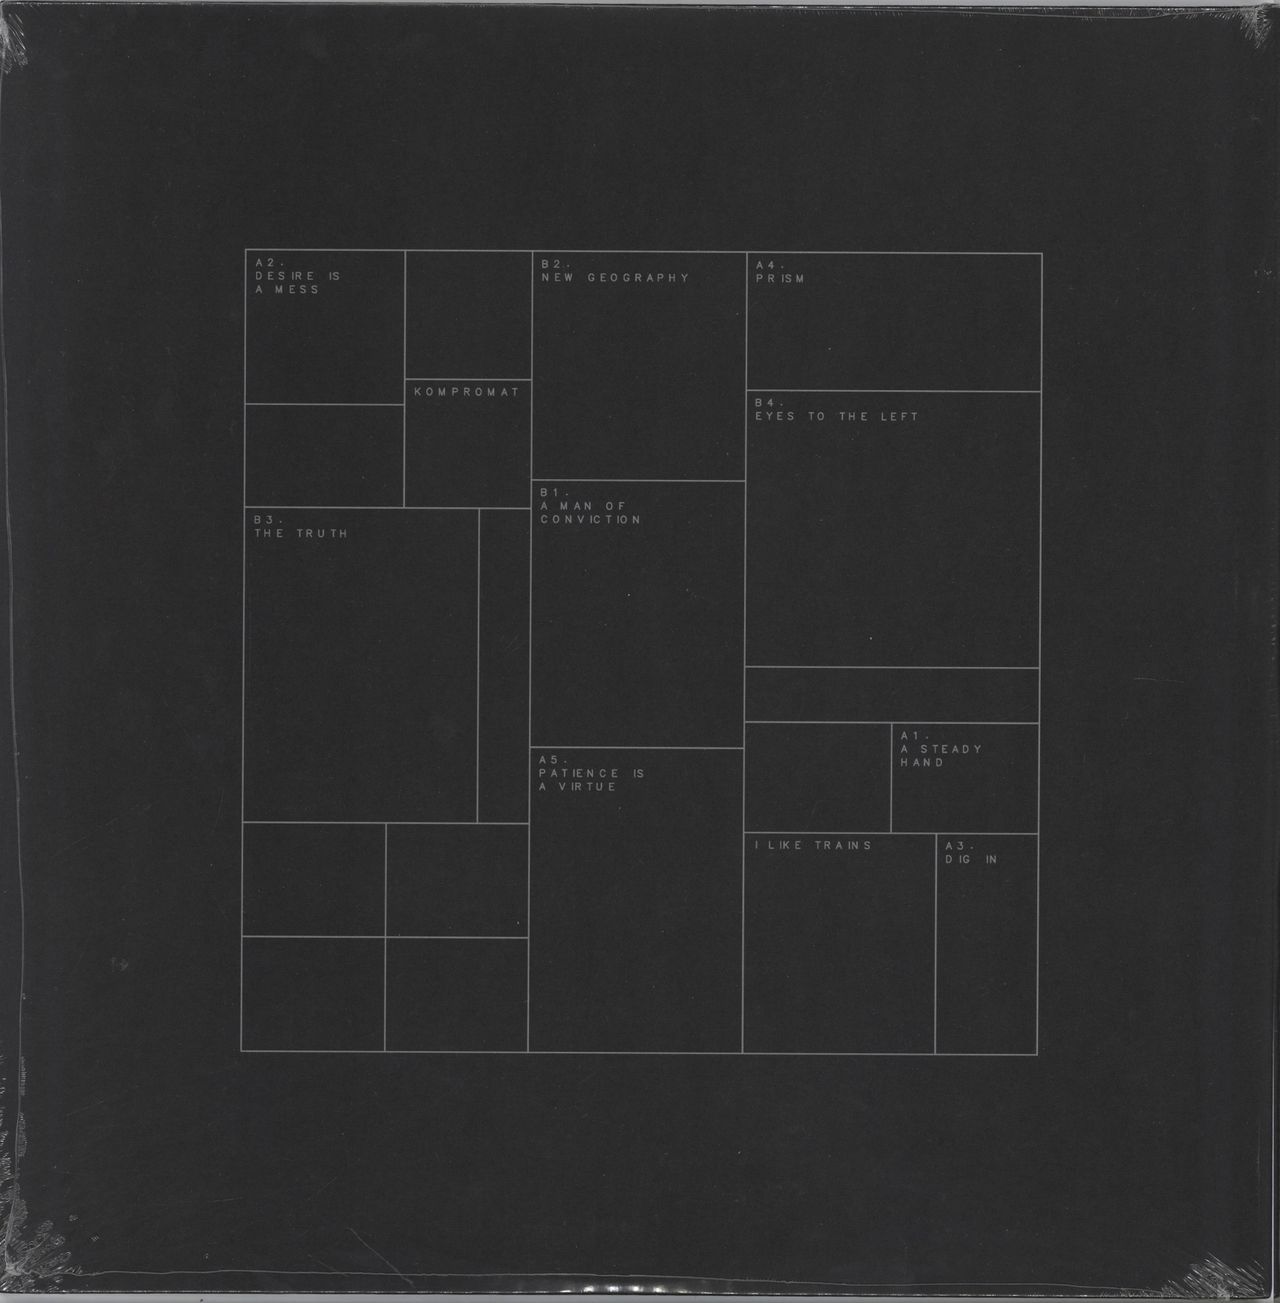 I Like Trains Kompromat - Silver Vinyl - Sealed UK vinyl LP album (LP record) 4260472170373